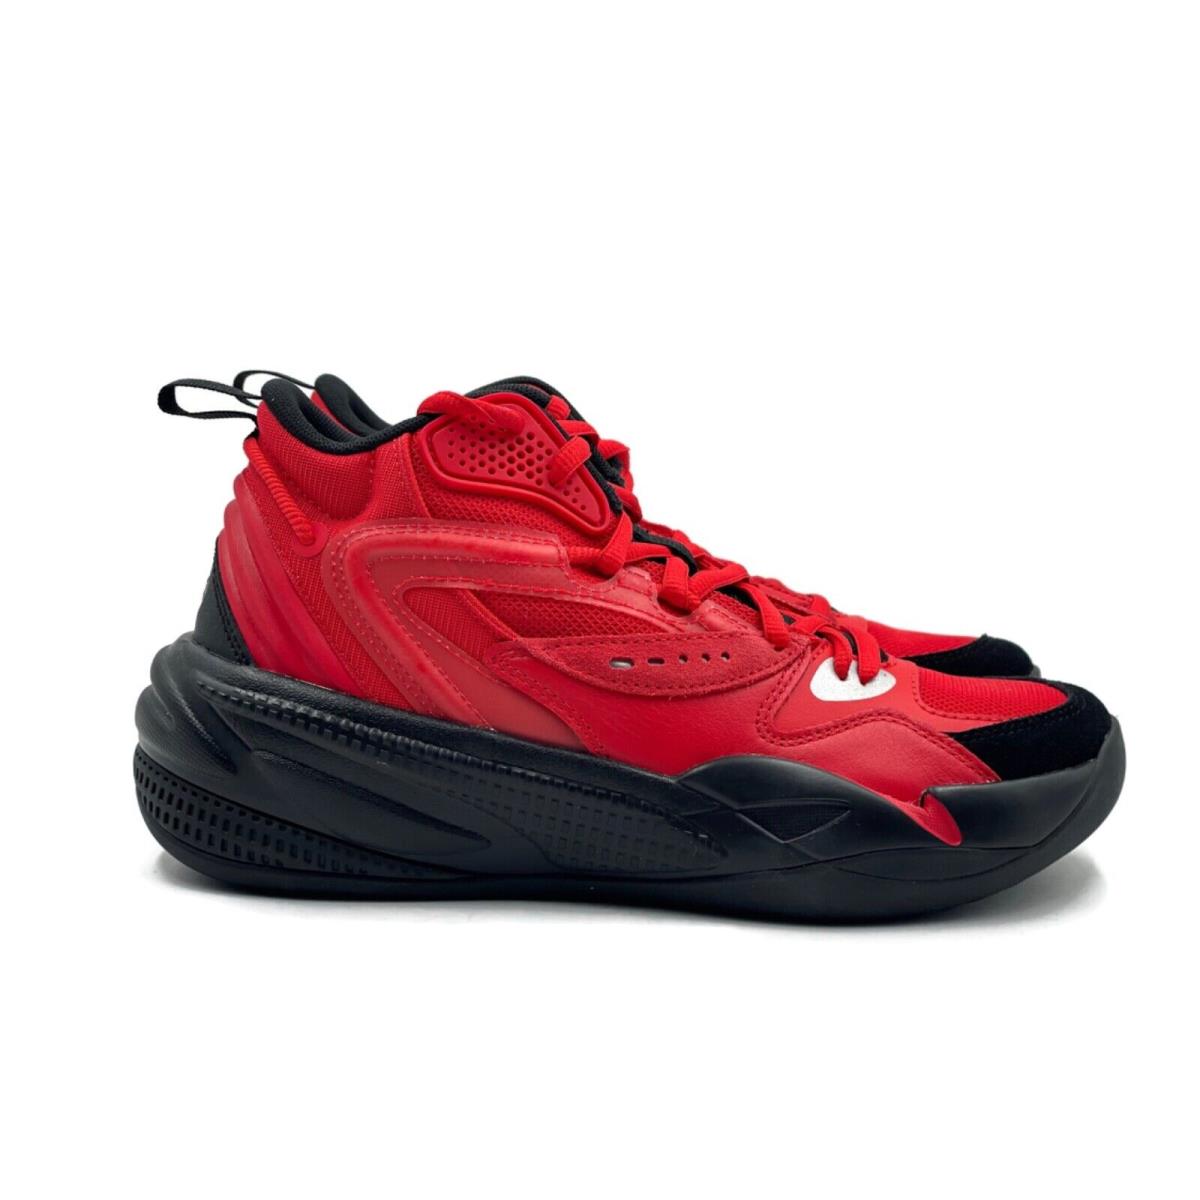 Puma Rs-dreamer Mid JR Big Kid Basketball Shoe Red Black Trainer Sneaker J Cole